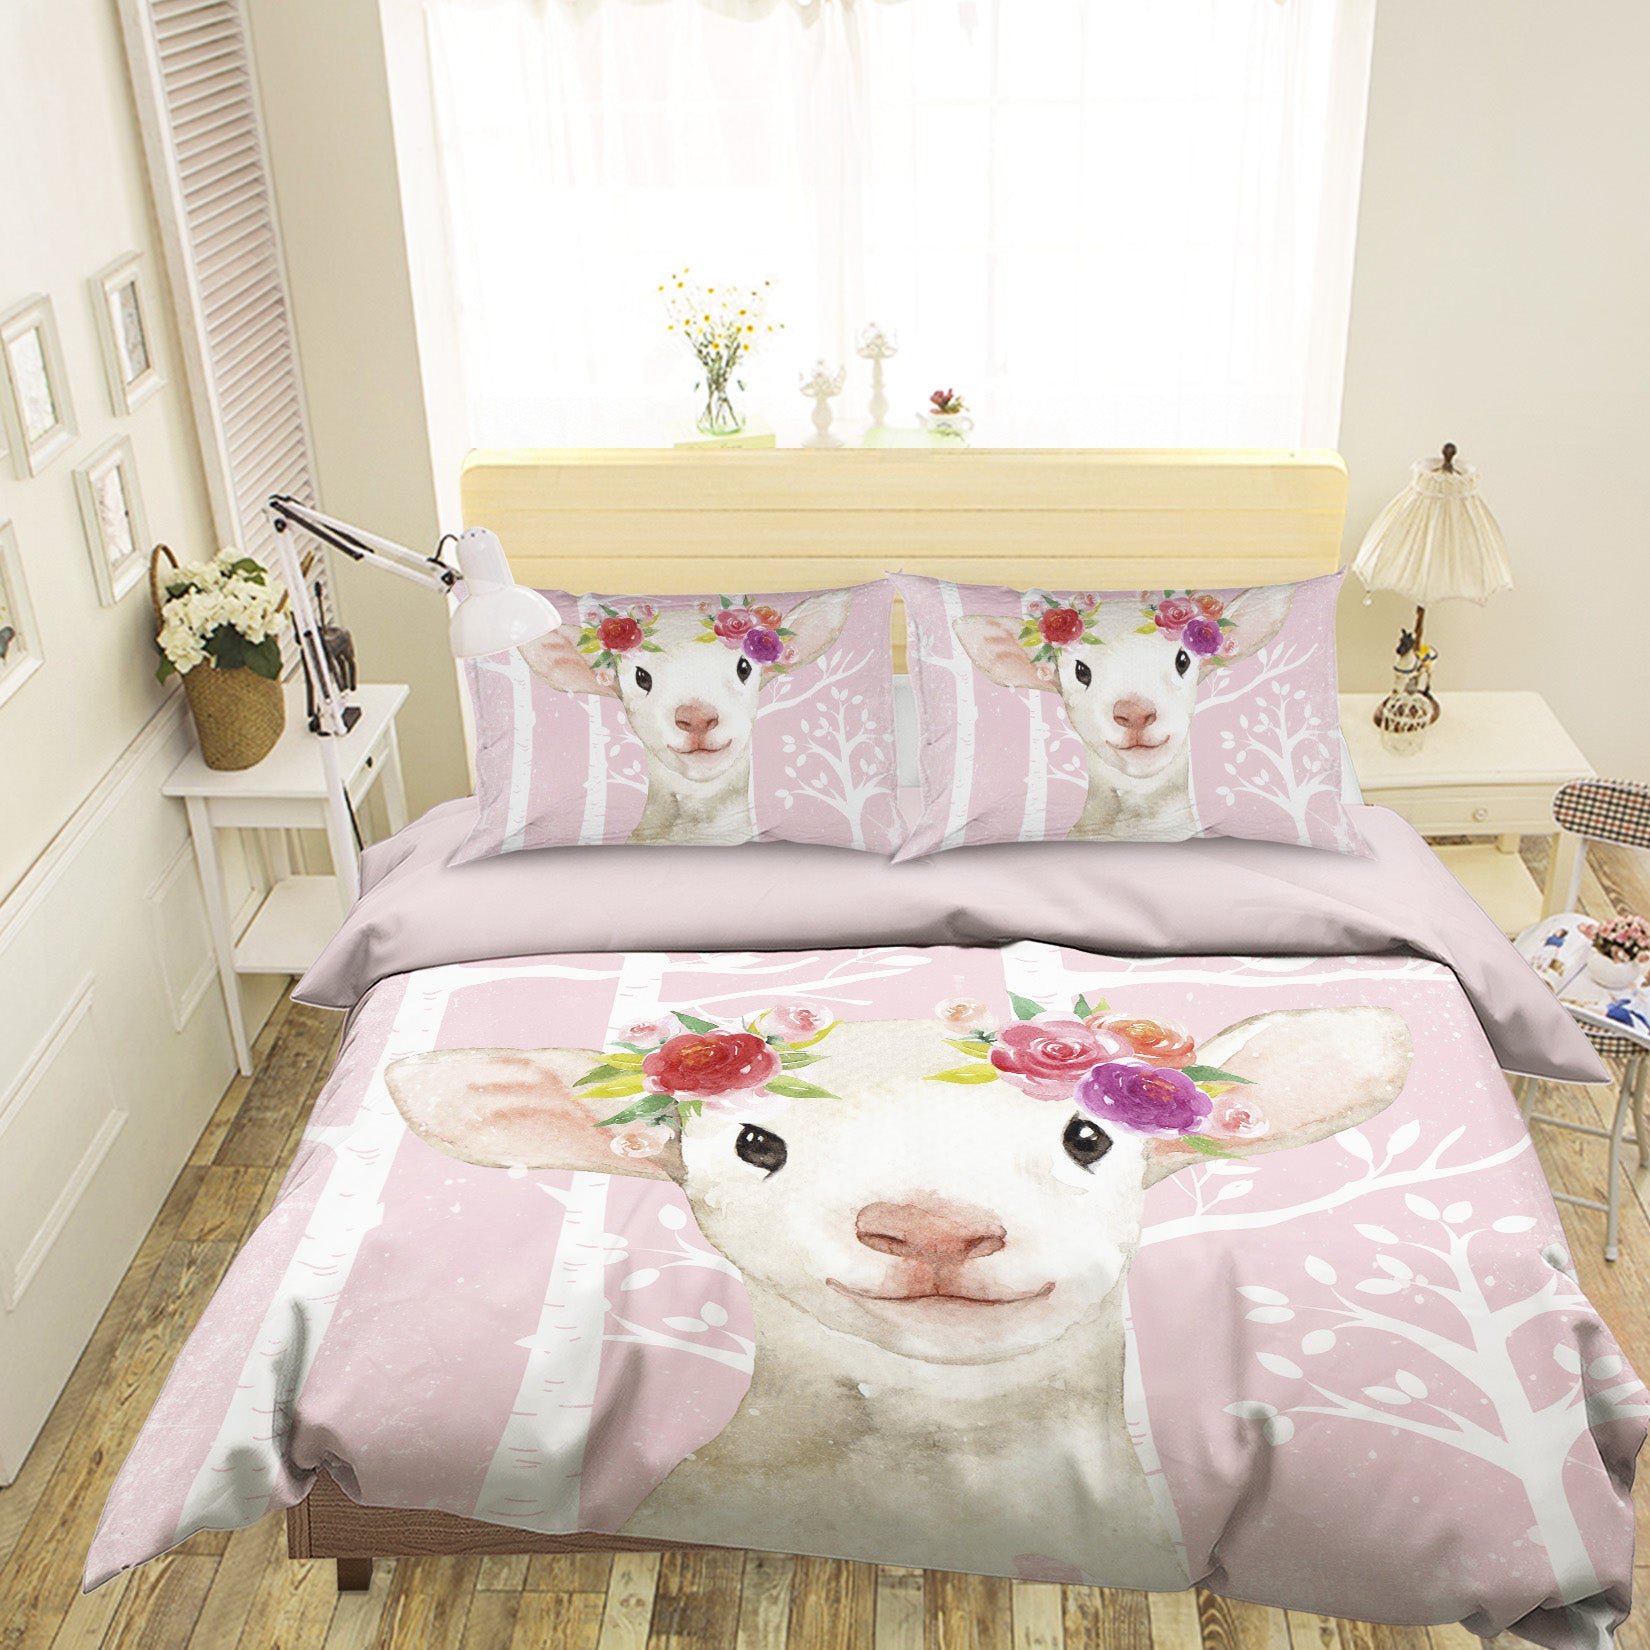 3D White Sheep Flower 011 Uta Naumann Bedding Bed Pillowcases Quilt